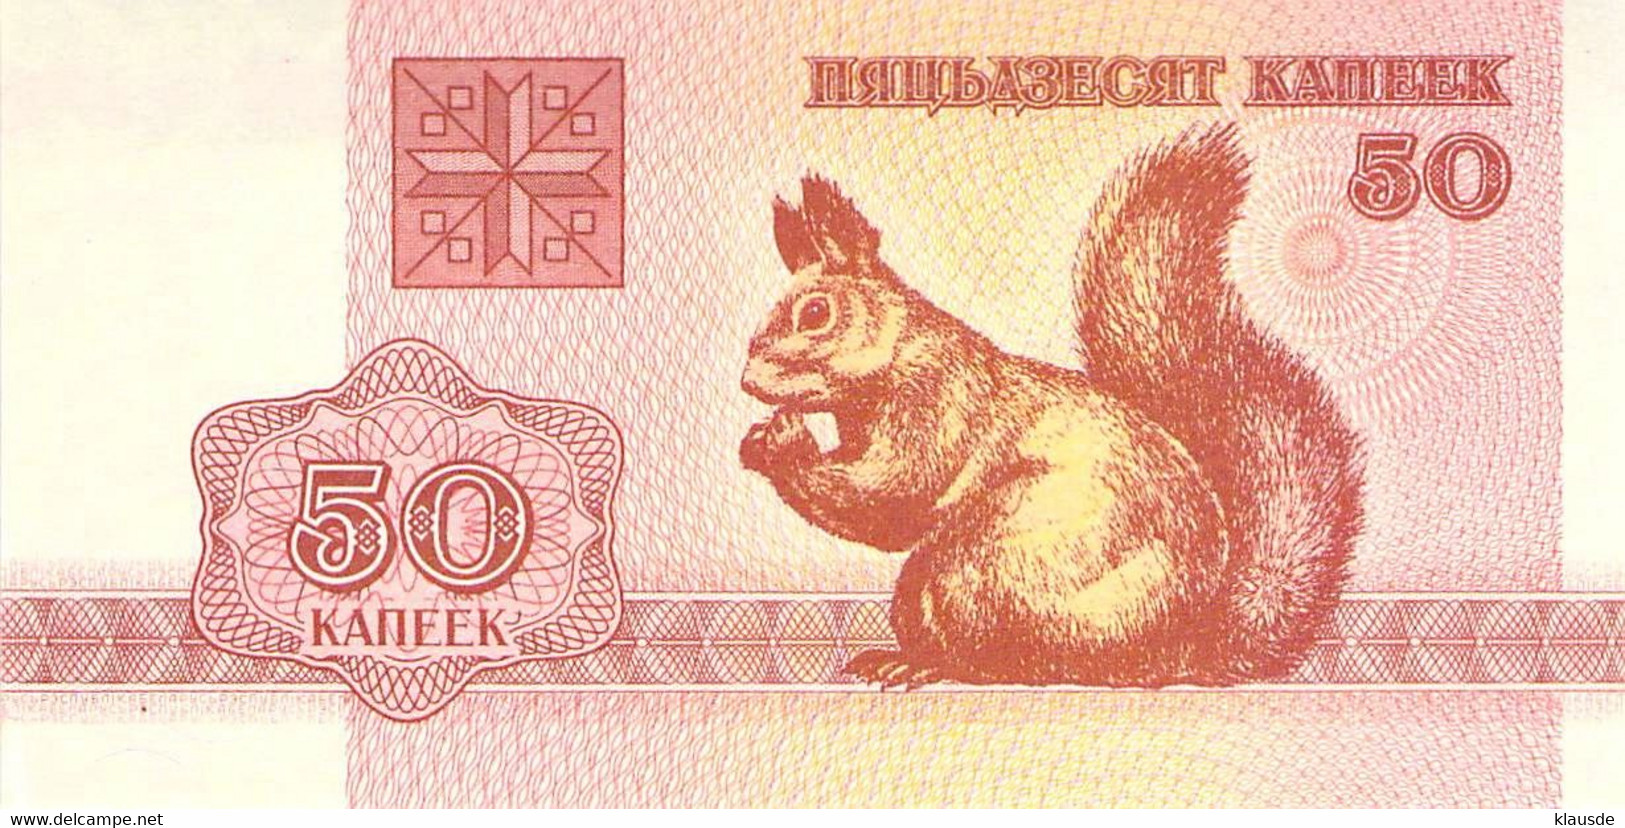 1 Banknoten 50 Rubel 2002 UNC Belarus Weissrussland - Other - Europe